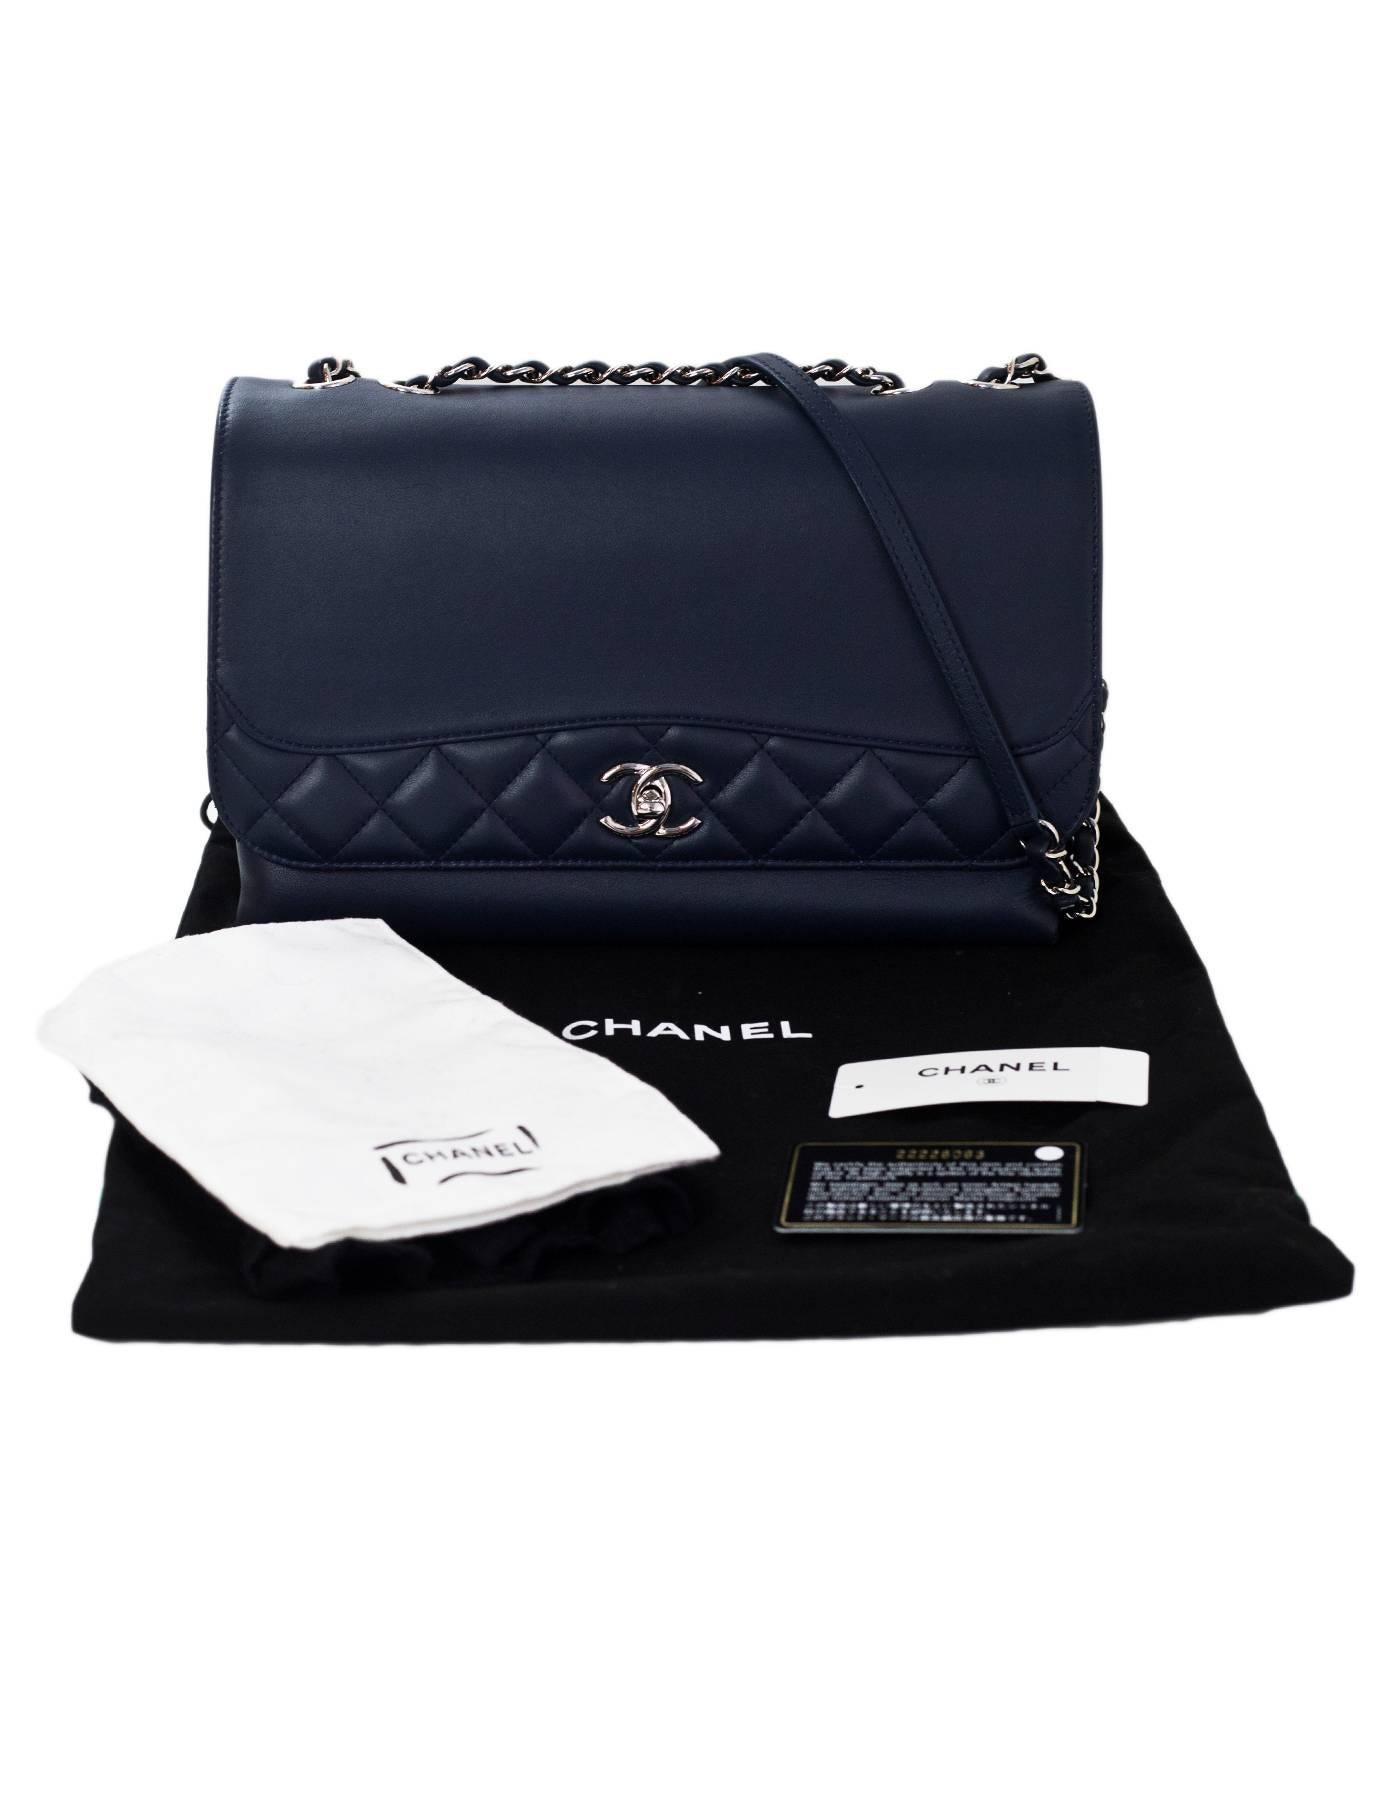 Chanel 2016 Blue Smooth & Quilted Leather Shoulder Bag 4